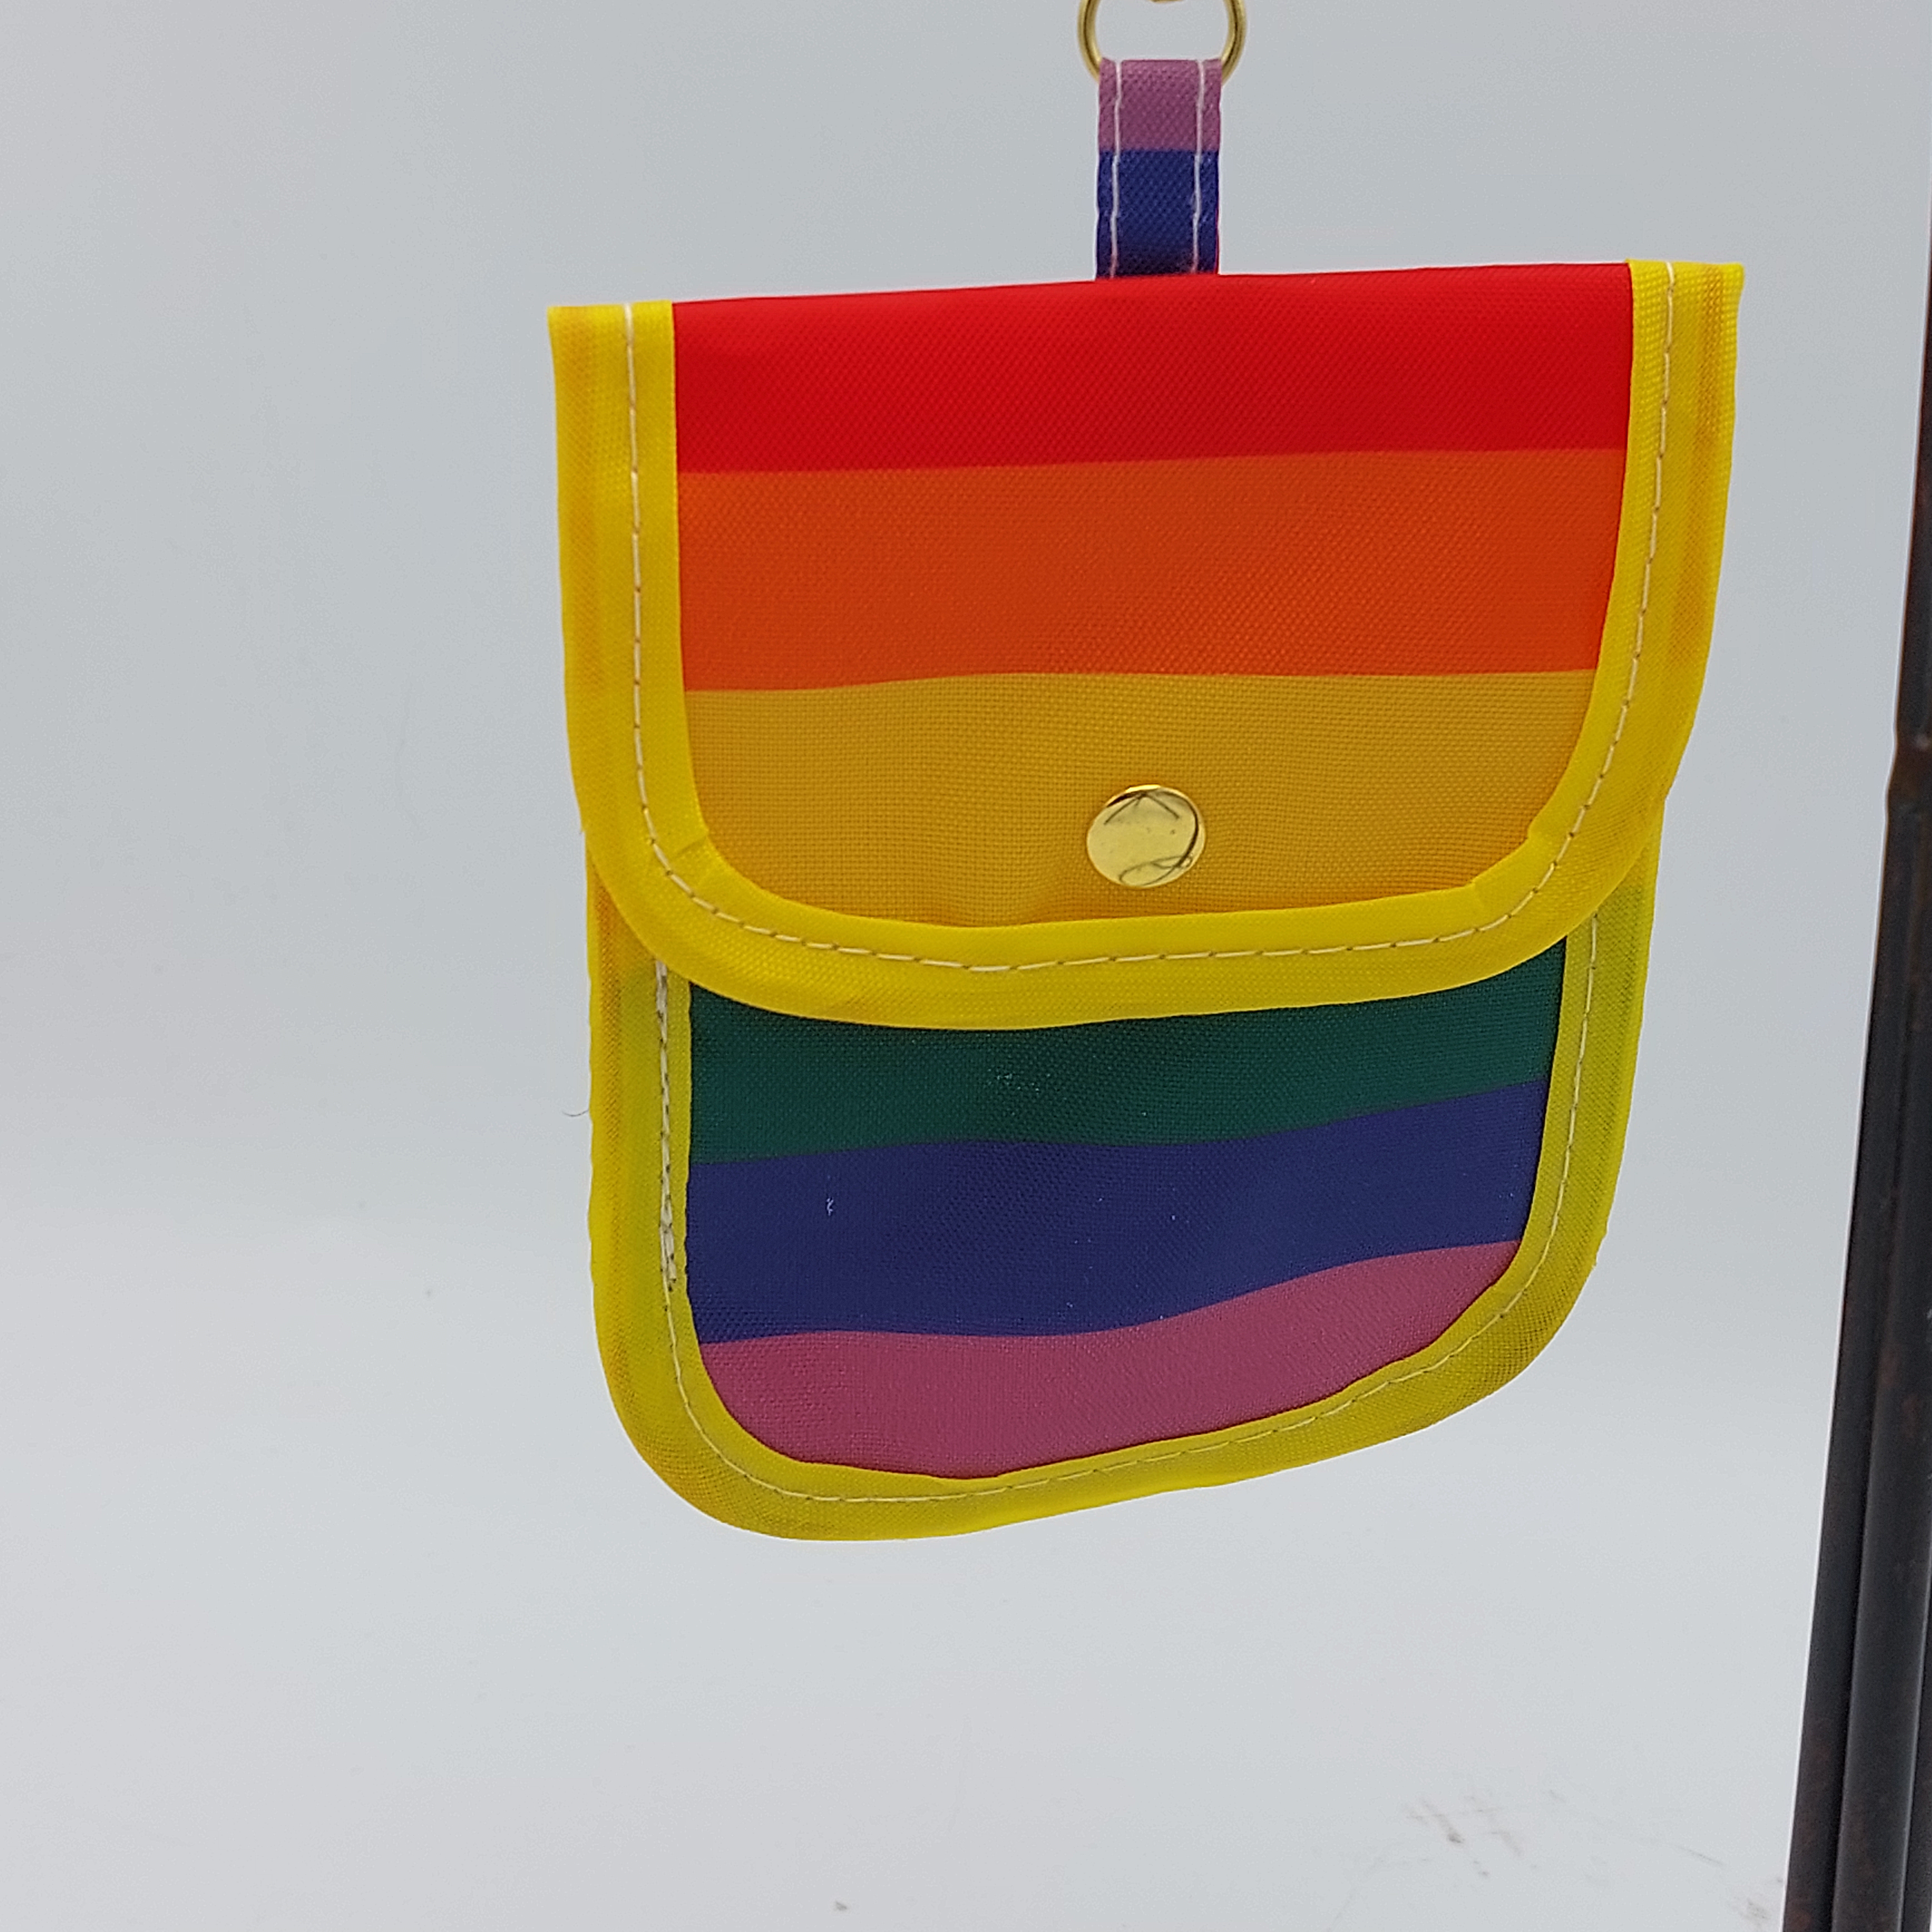 Tasje voor mondkapje & handgel, regenboog